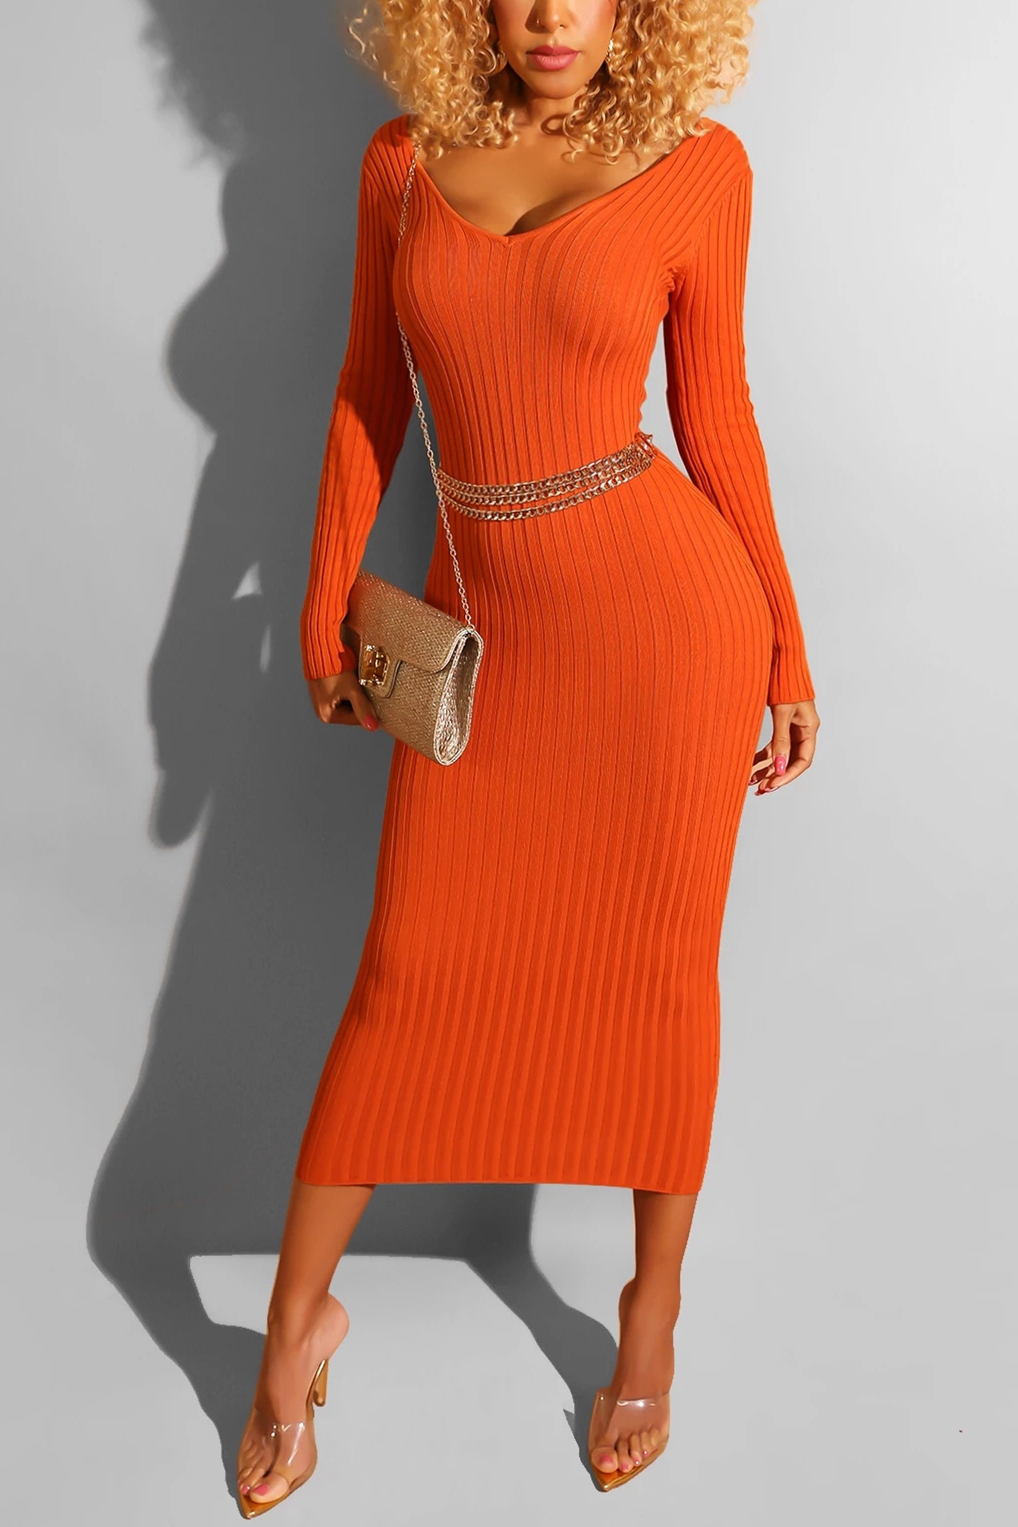 Fashion V-Neck Long-Sleeved Orange Dress (without belt)